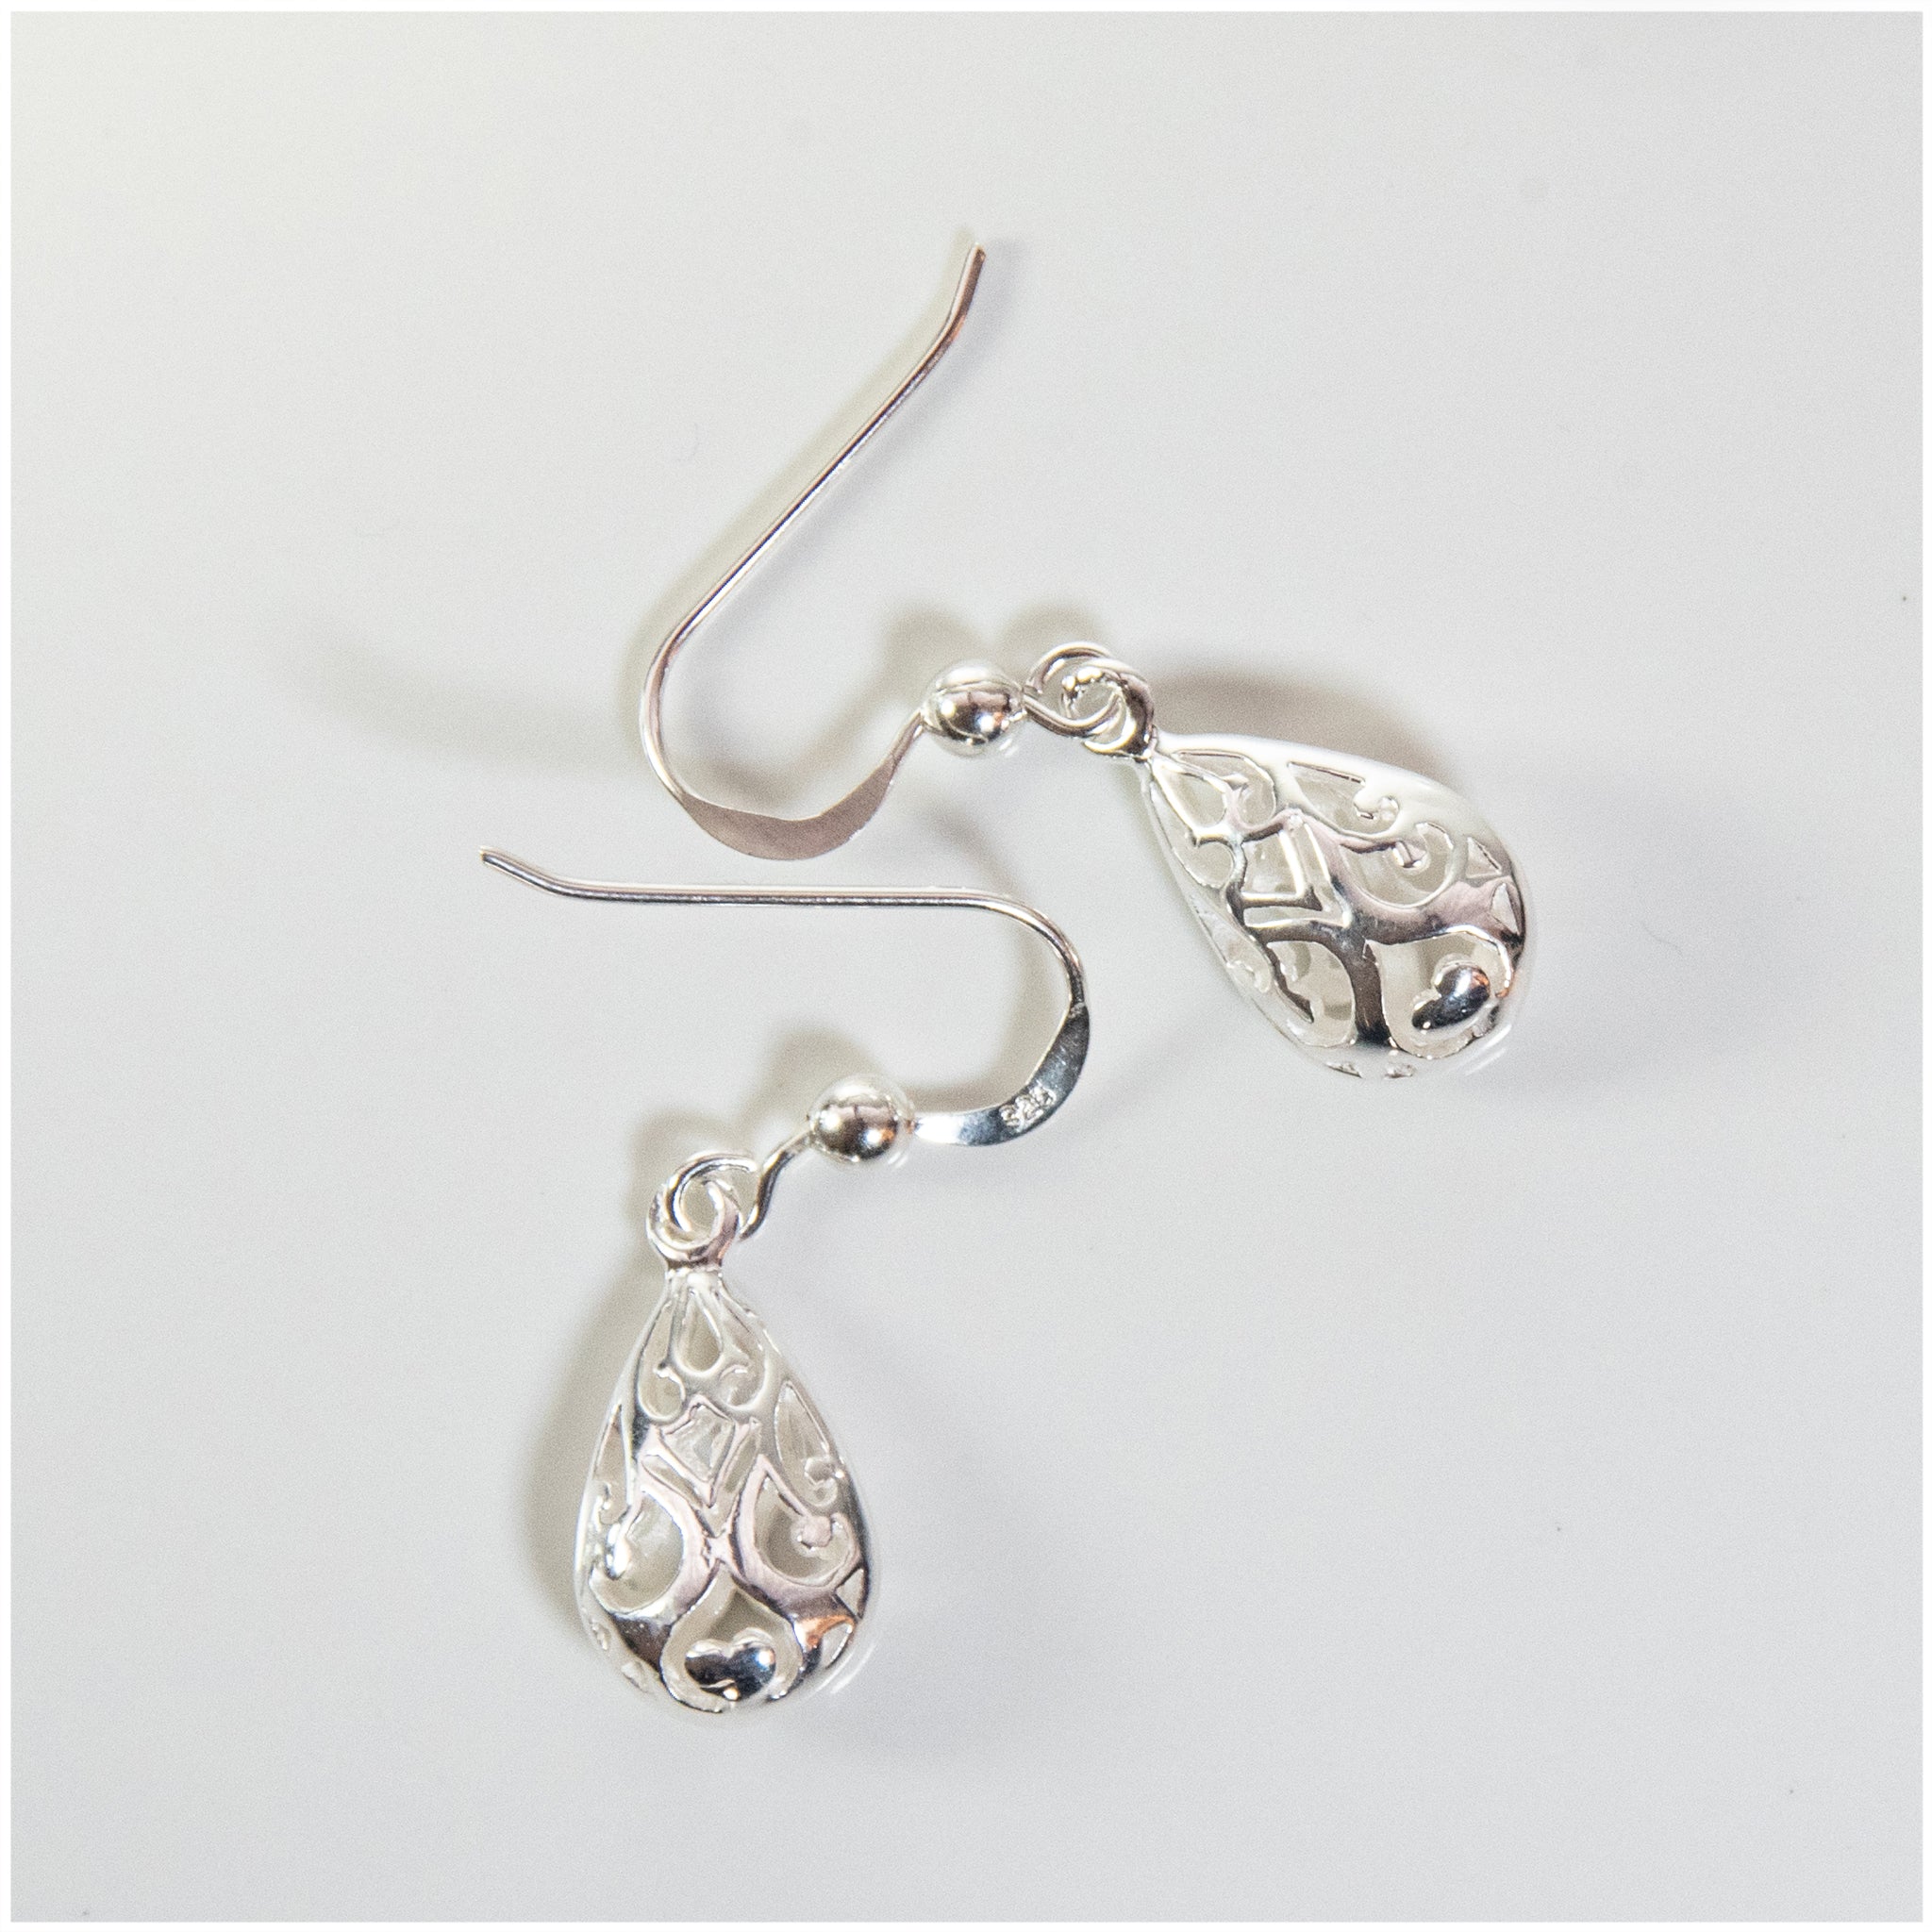 EL037 - Sterling Silver Teardrop Hook Earrings with Bead